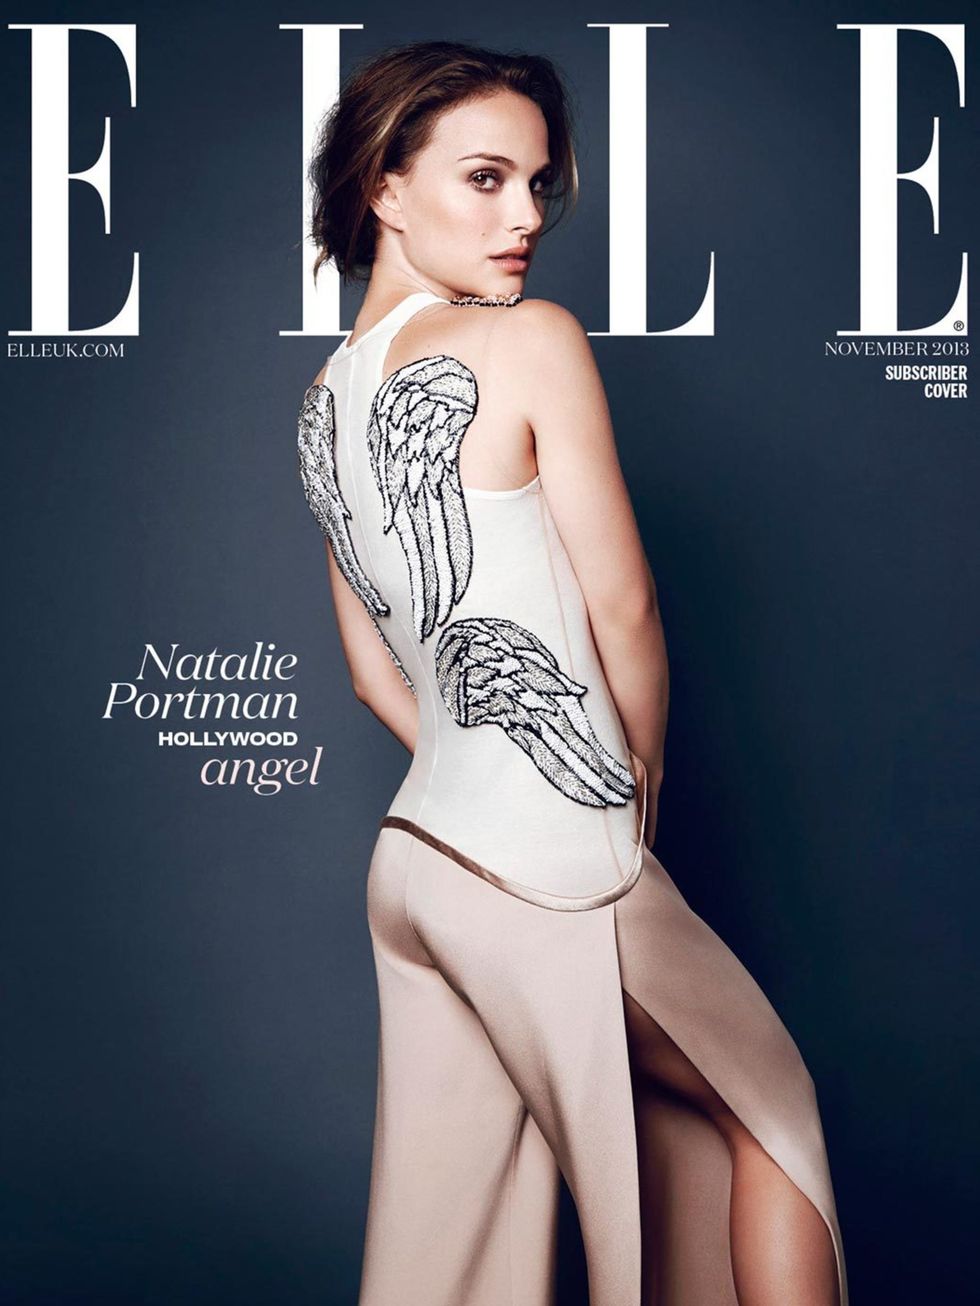 <p>Natalie Portman on ELLE's November 2013 subscriber cover</p>